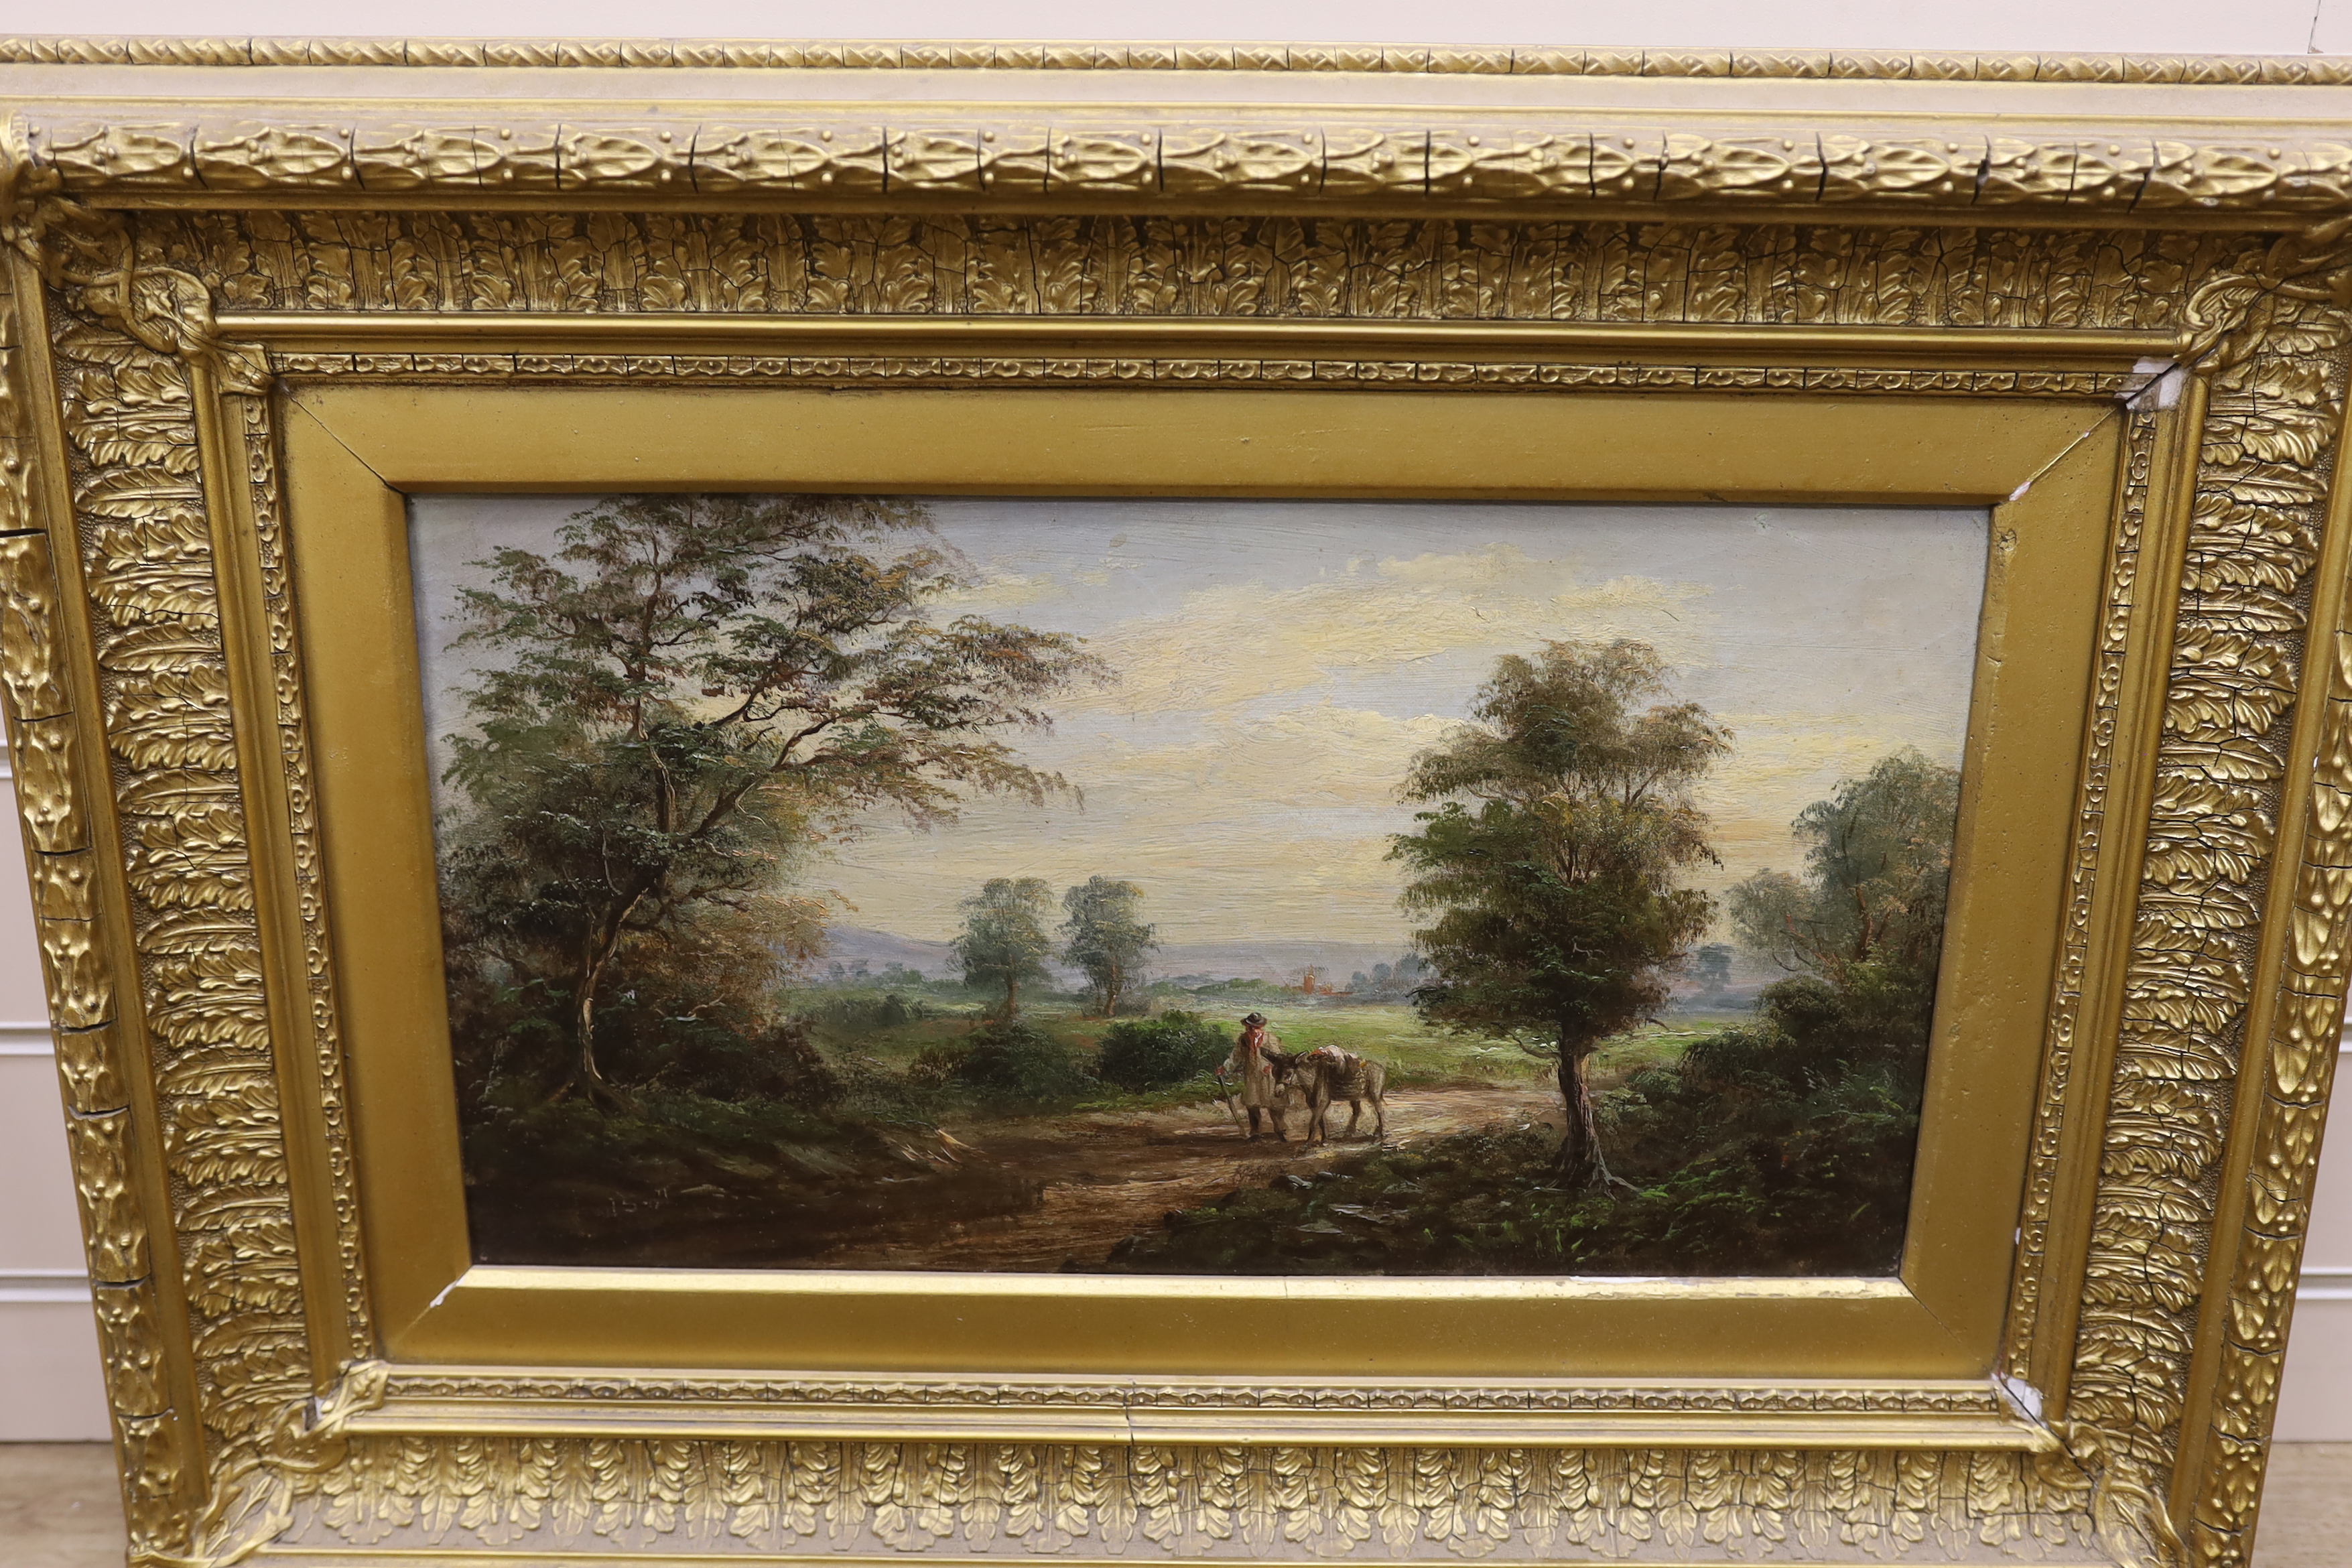 19th century, four oils on canvas, Landscapes, two signed S. Thompson, one signed J. Scott, 26 x 45cm, ornate gilt framed